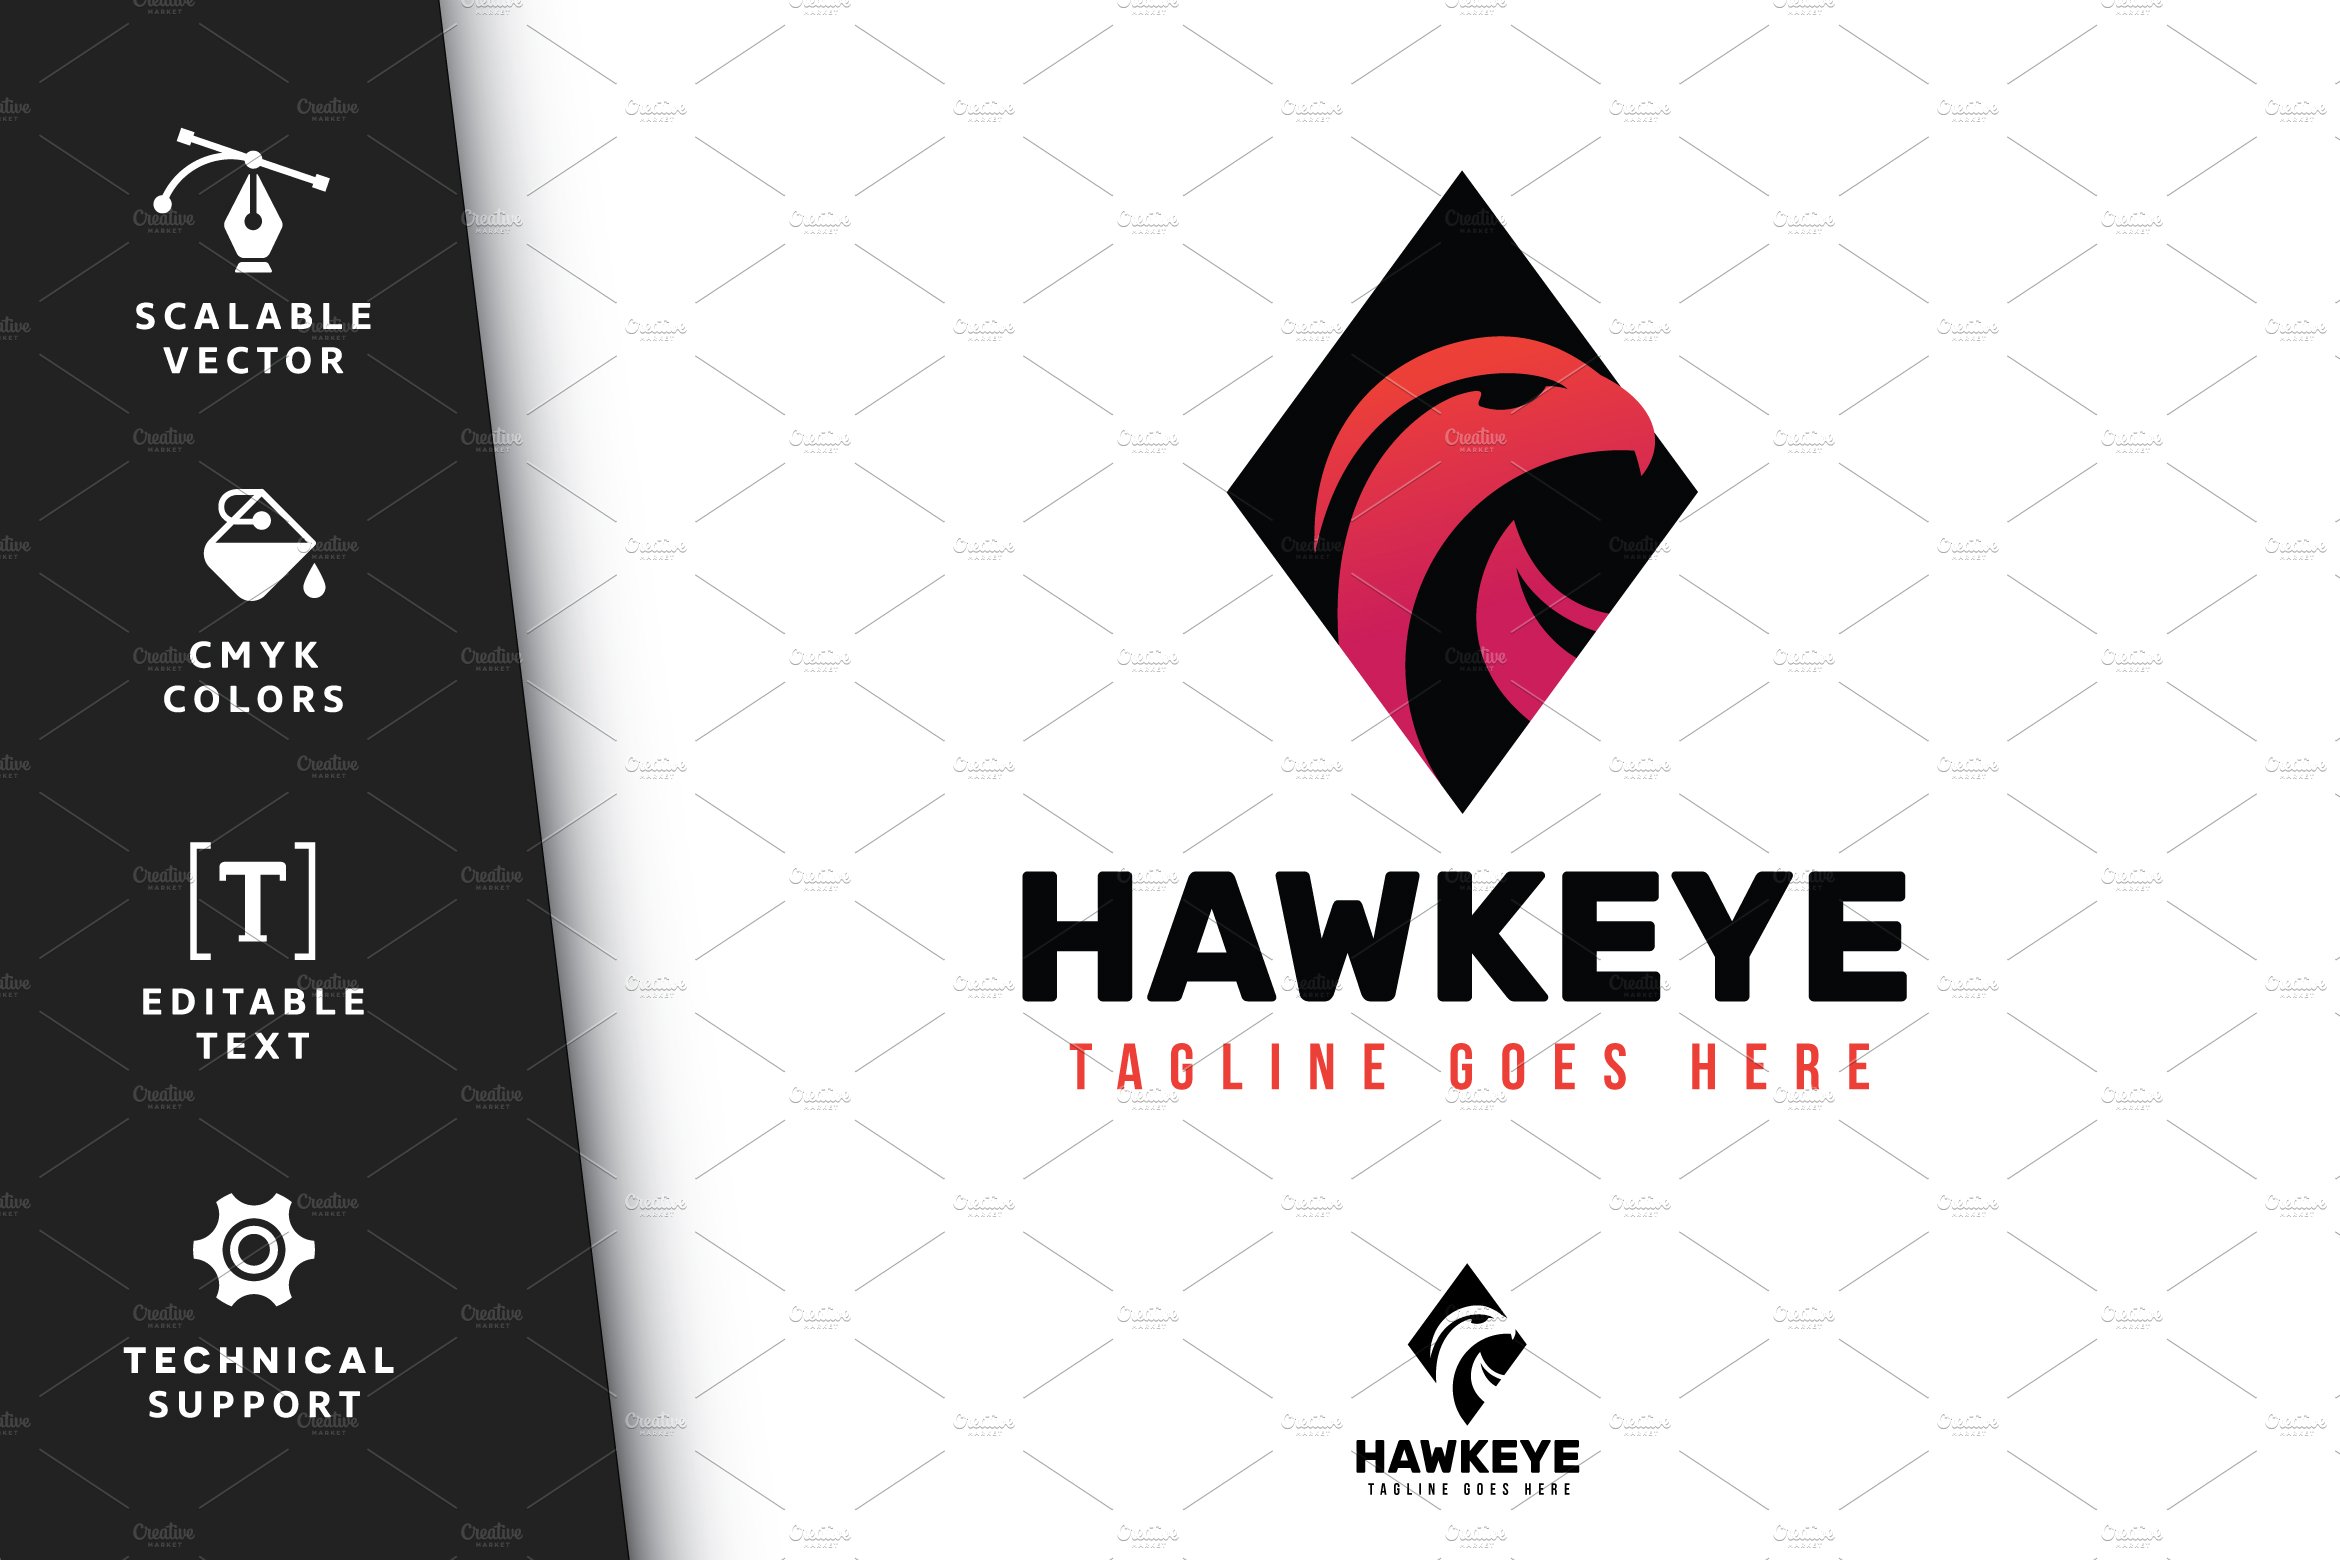 Hawkeye Logo cover image.